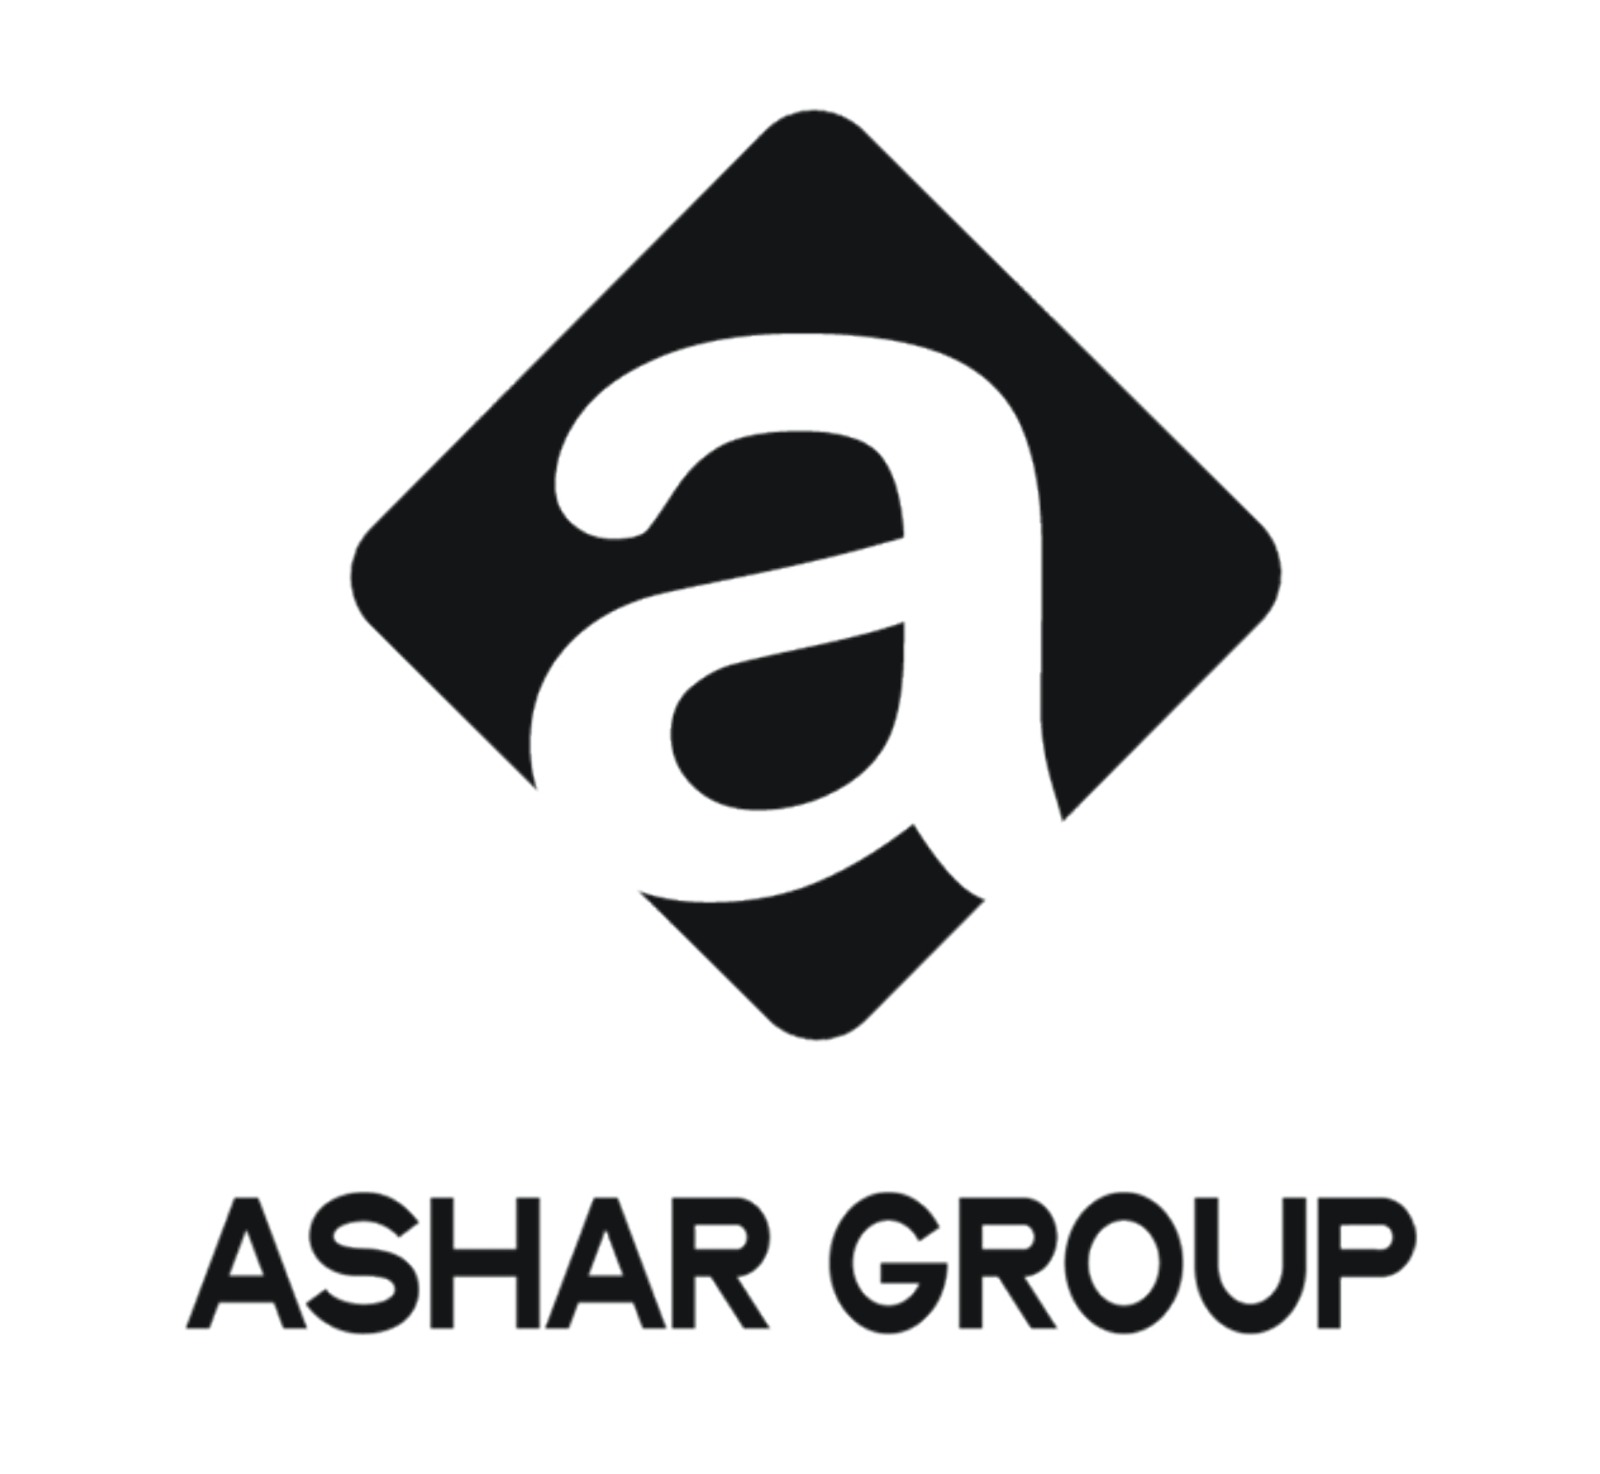 Ashar group 